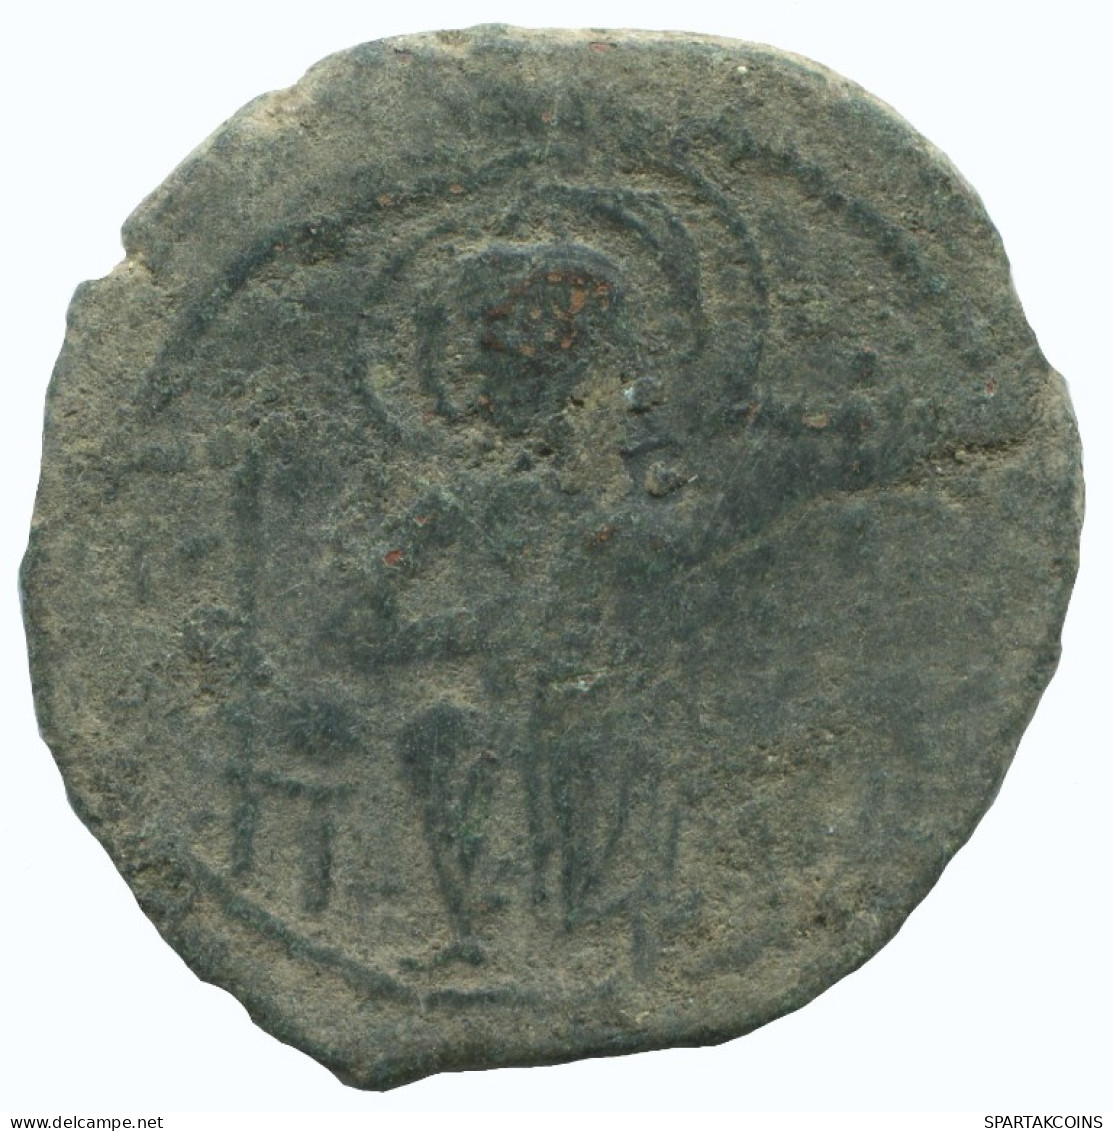 BASIL II "BOULGAROKTONOS" Authentic Ancient BYZANTINE Coin 8.1g/32m #AA613.21.U.A - Byzantine